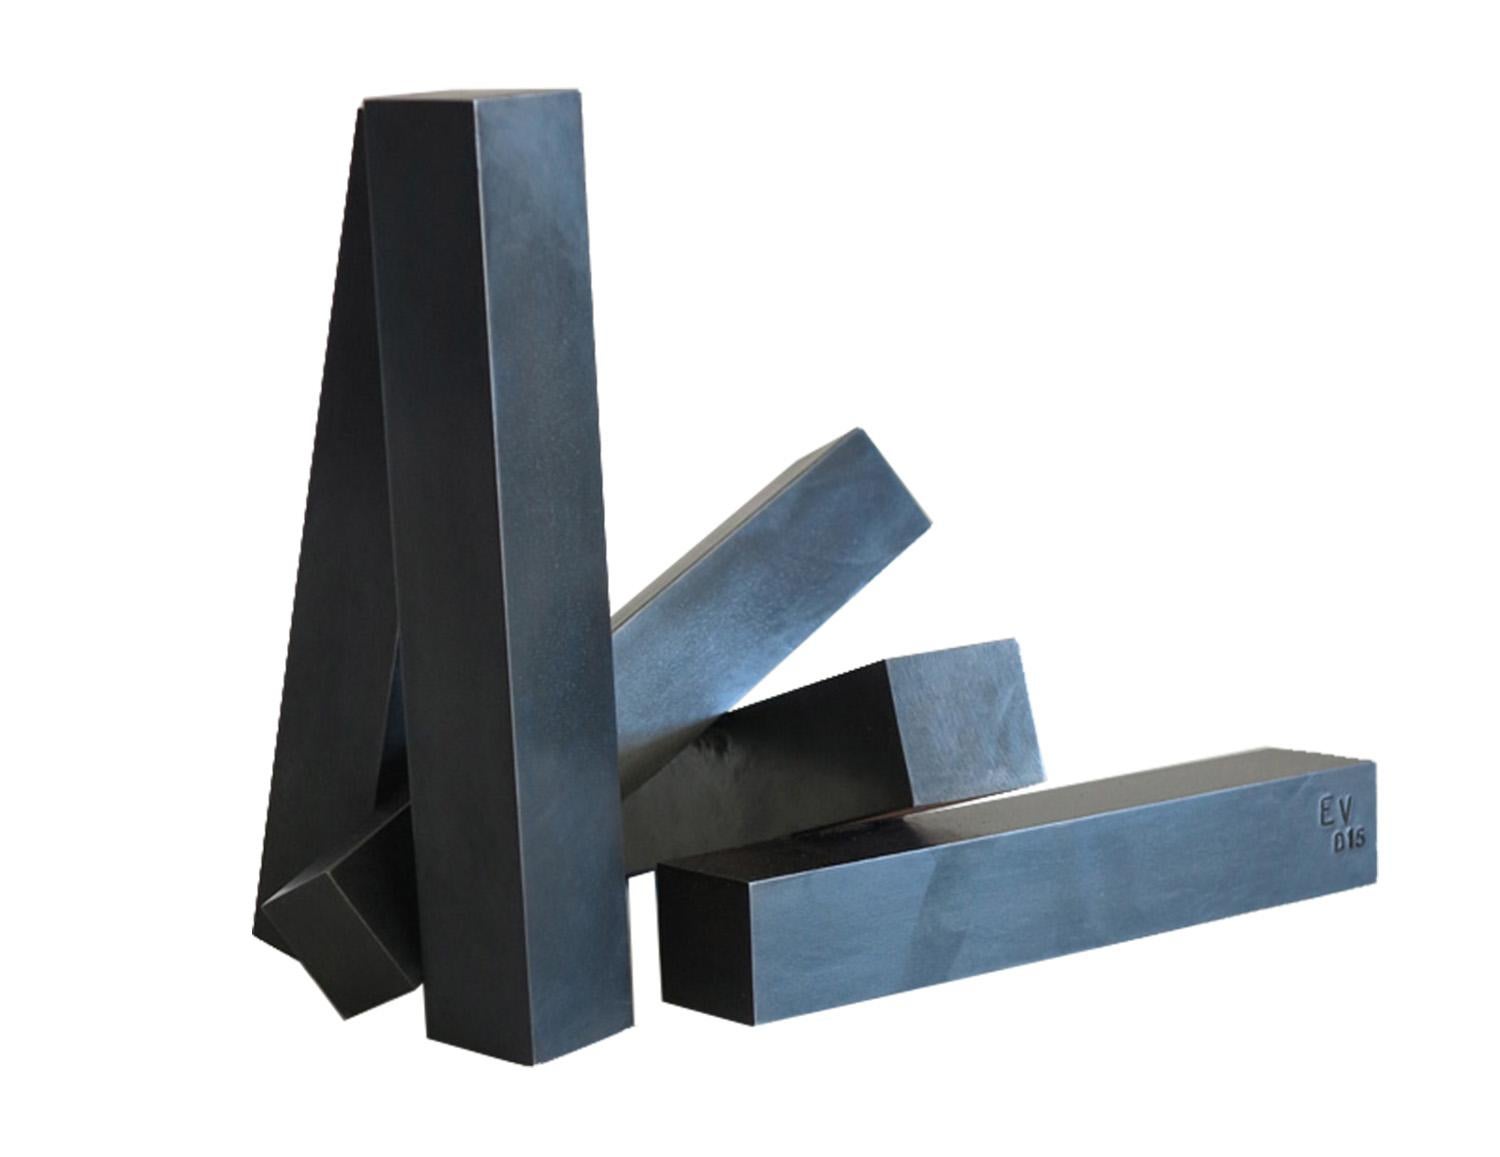 Etienne Viard Abstract Sculpture – 5 Barres